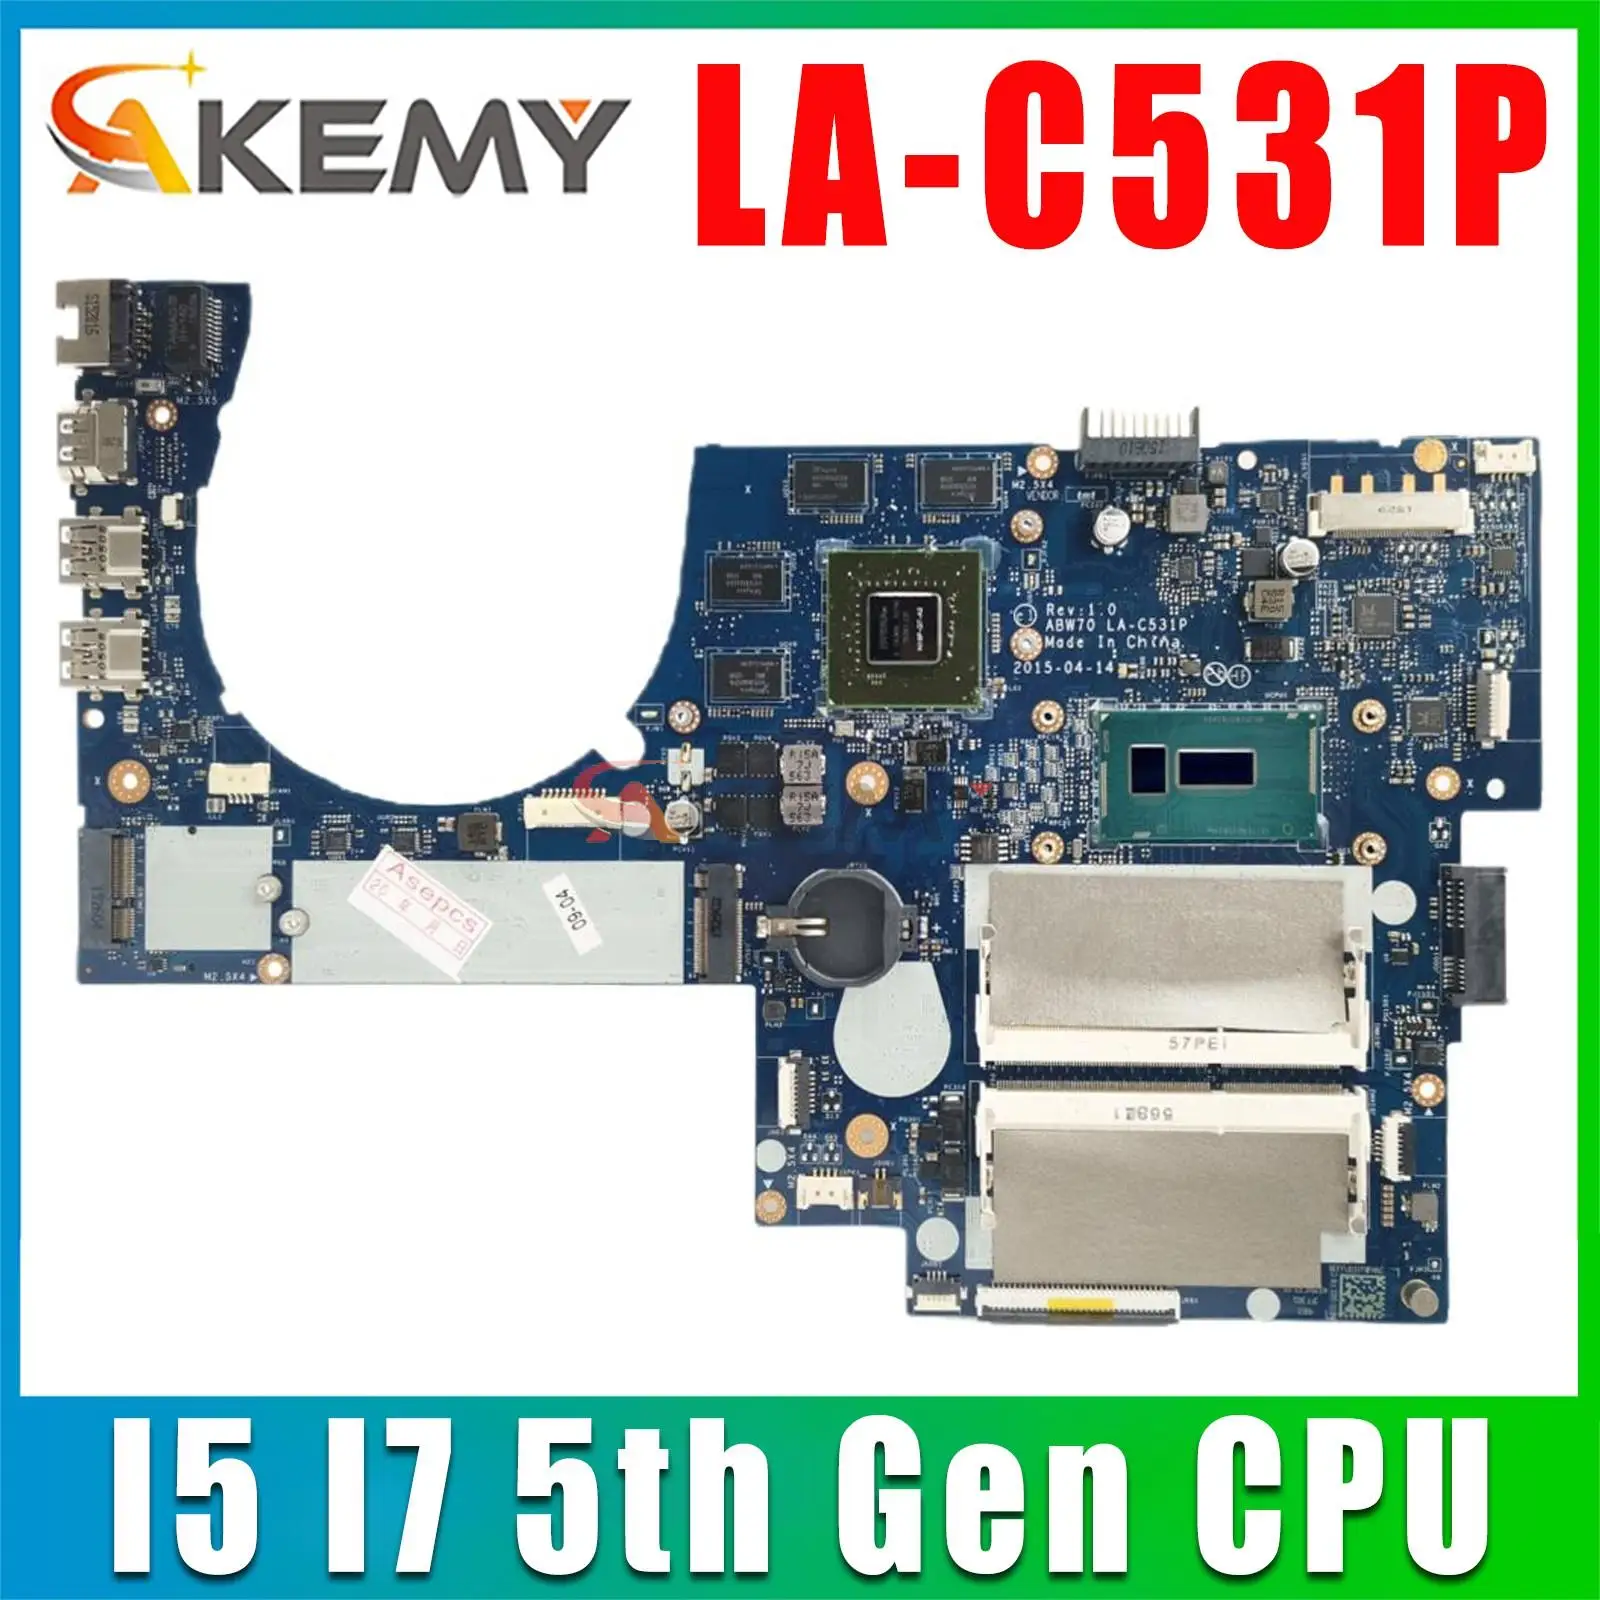 

ABW70 LA-C531P For HP Envy 17T-N M7-N Laptop Motherboard With i5-5200U i7-5500U 940M 2GB-GPU 813681-001 813681-601 813680-601